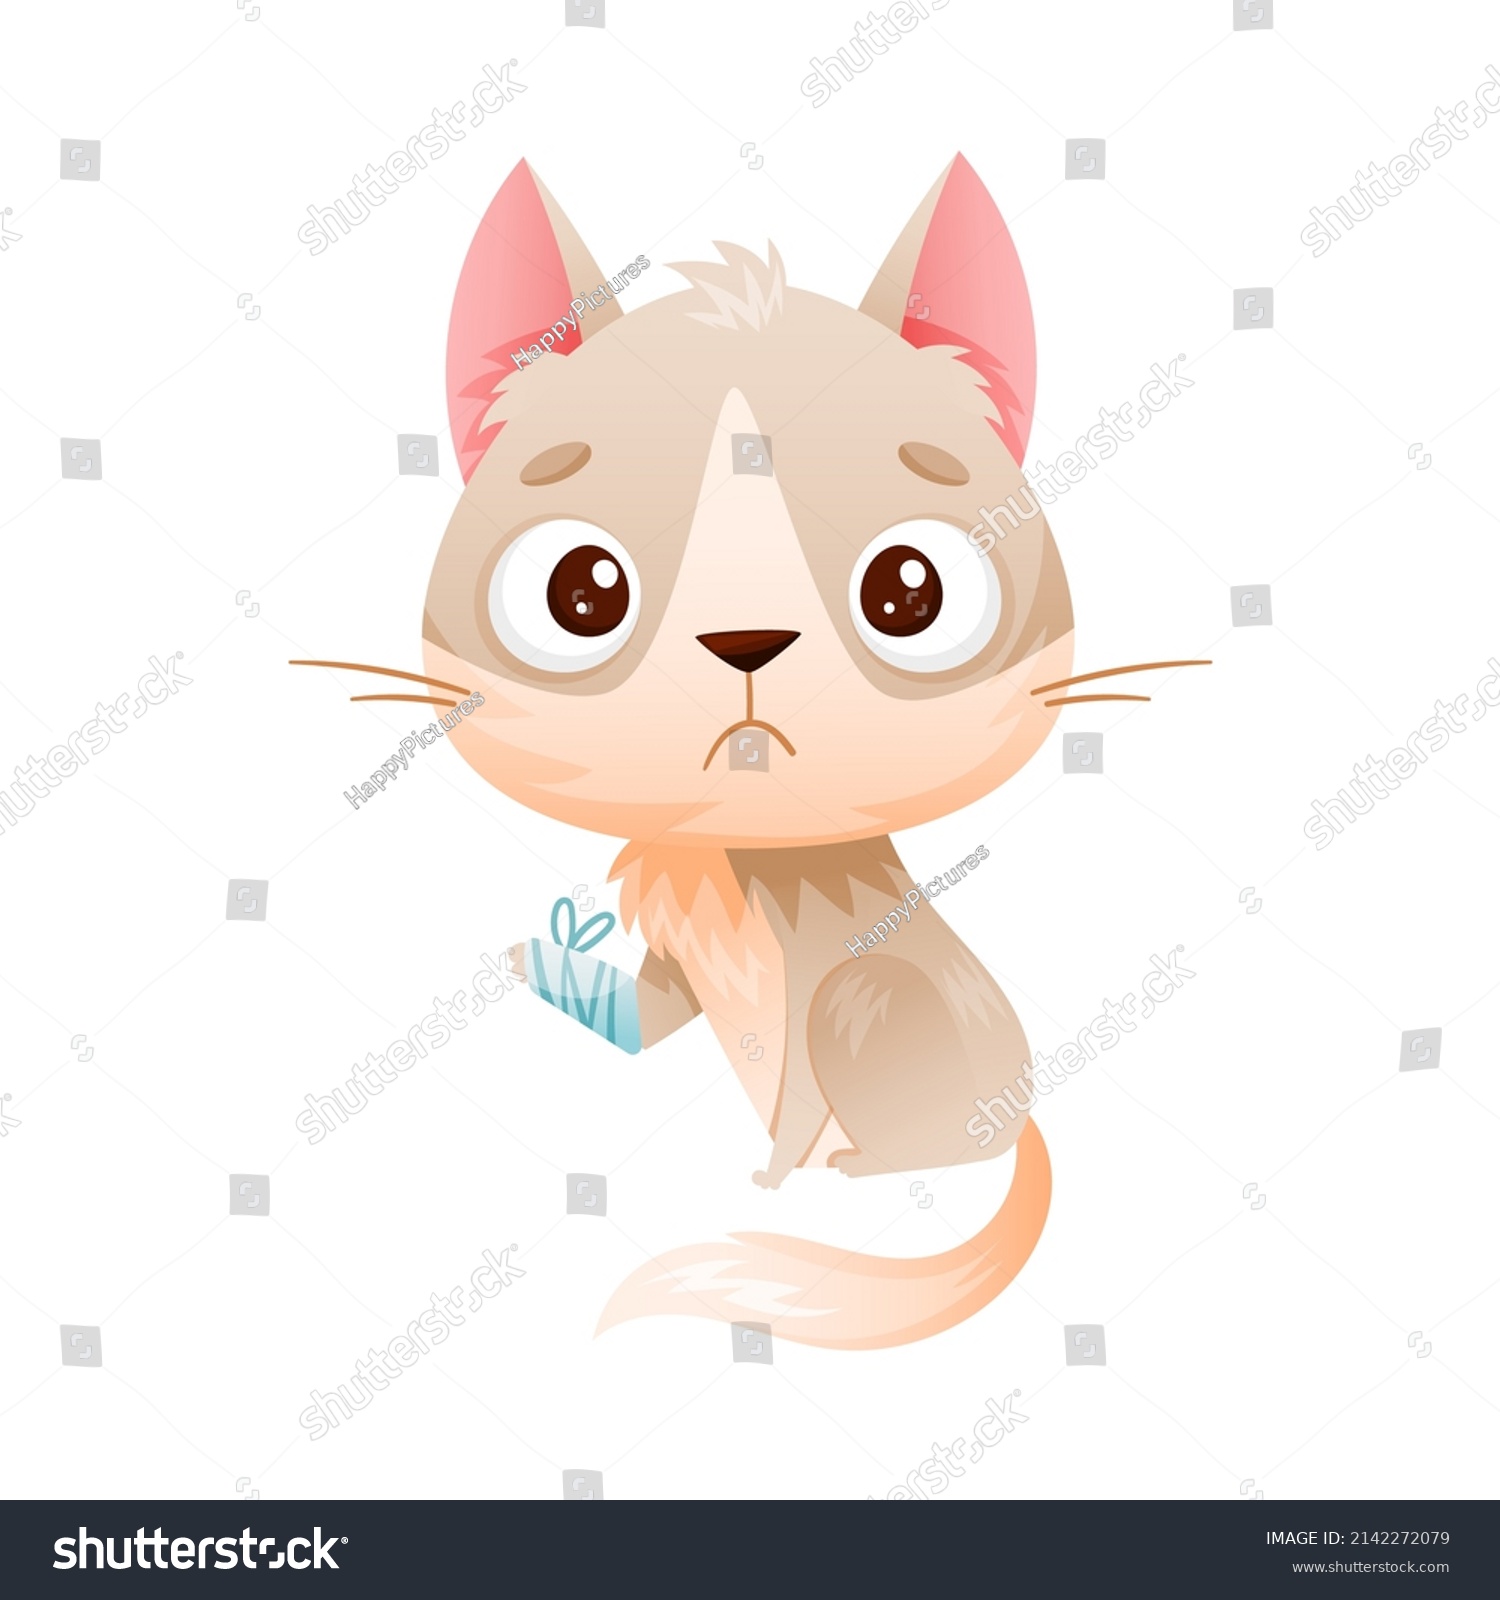 SVG of Sick cat pet. Sad kitten animal with bandage on its paw cartoon vector illustration svg